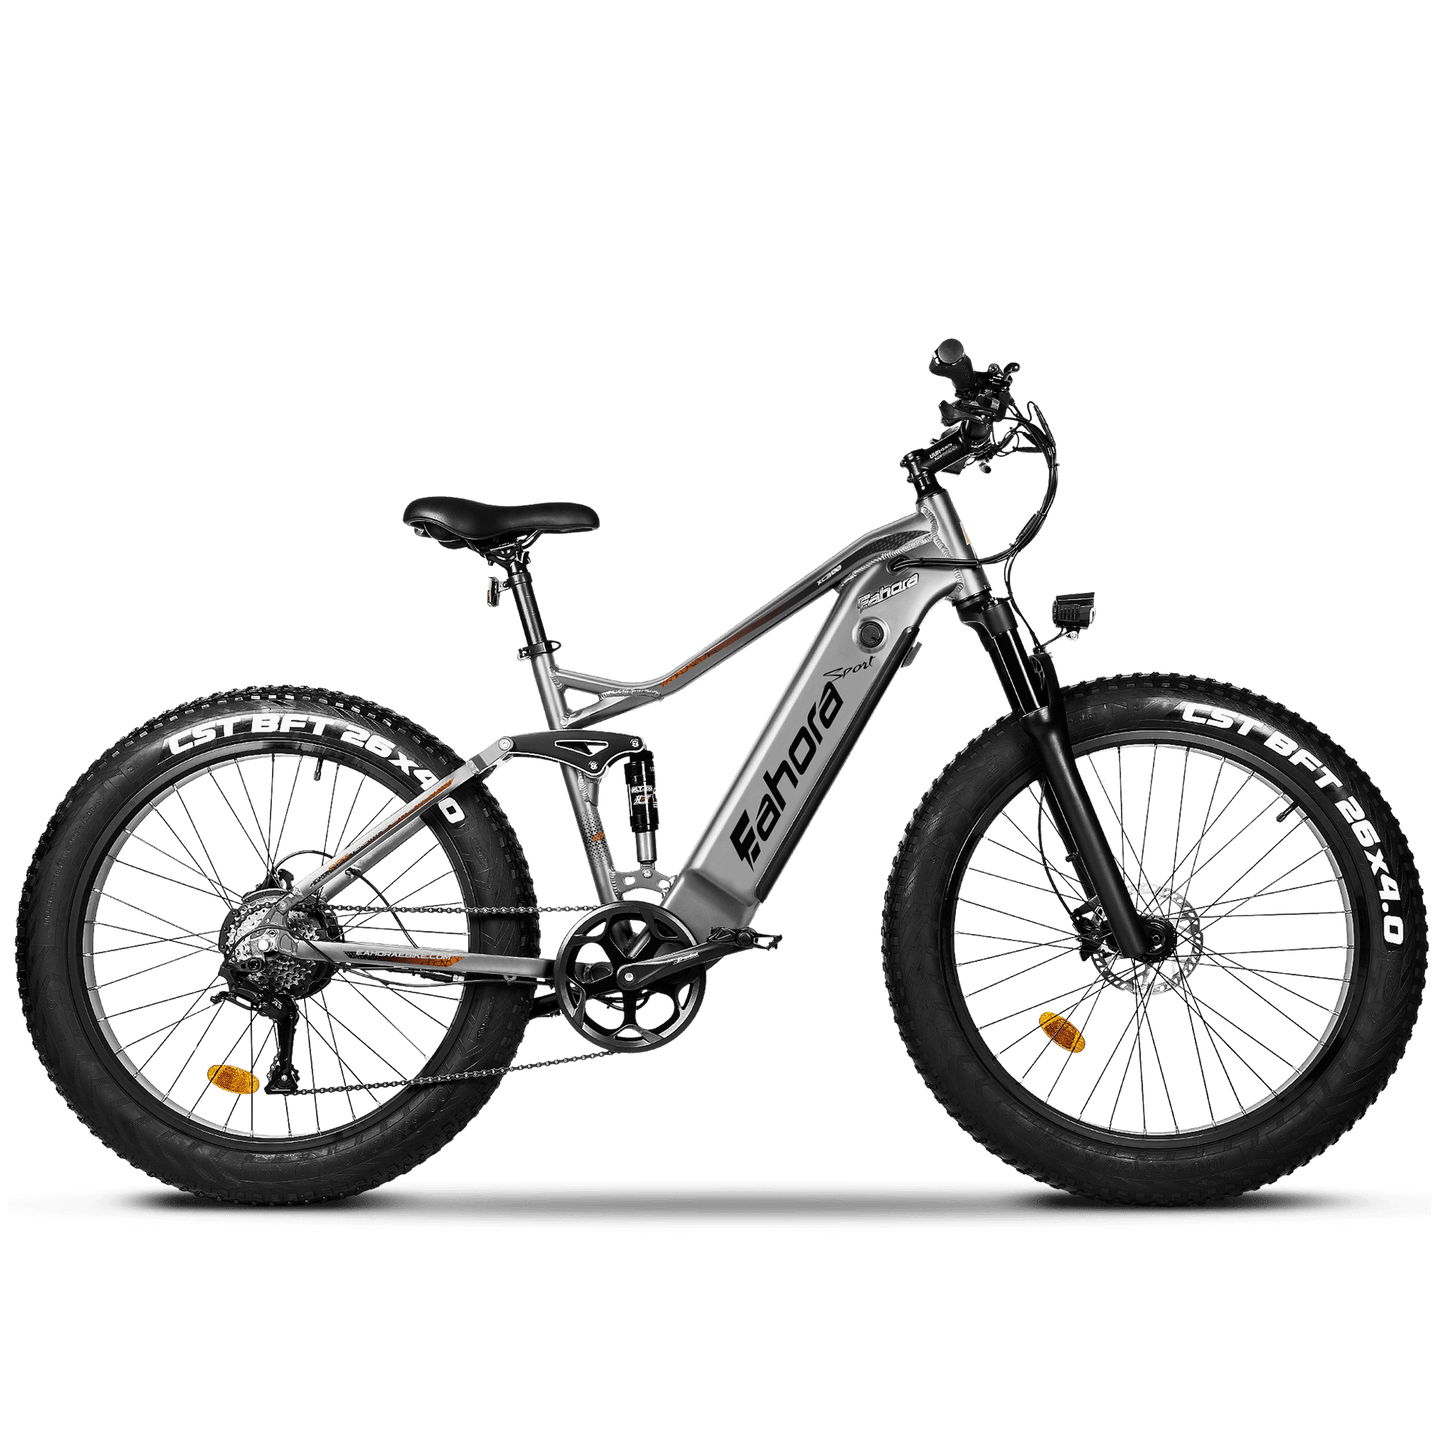 EAHORA | XC300 750W Electric Mountain Bike